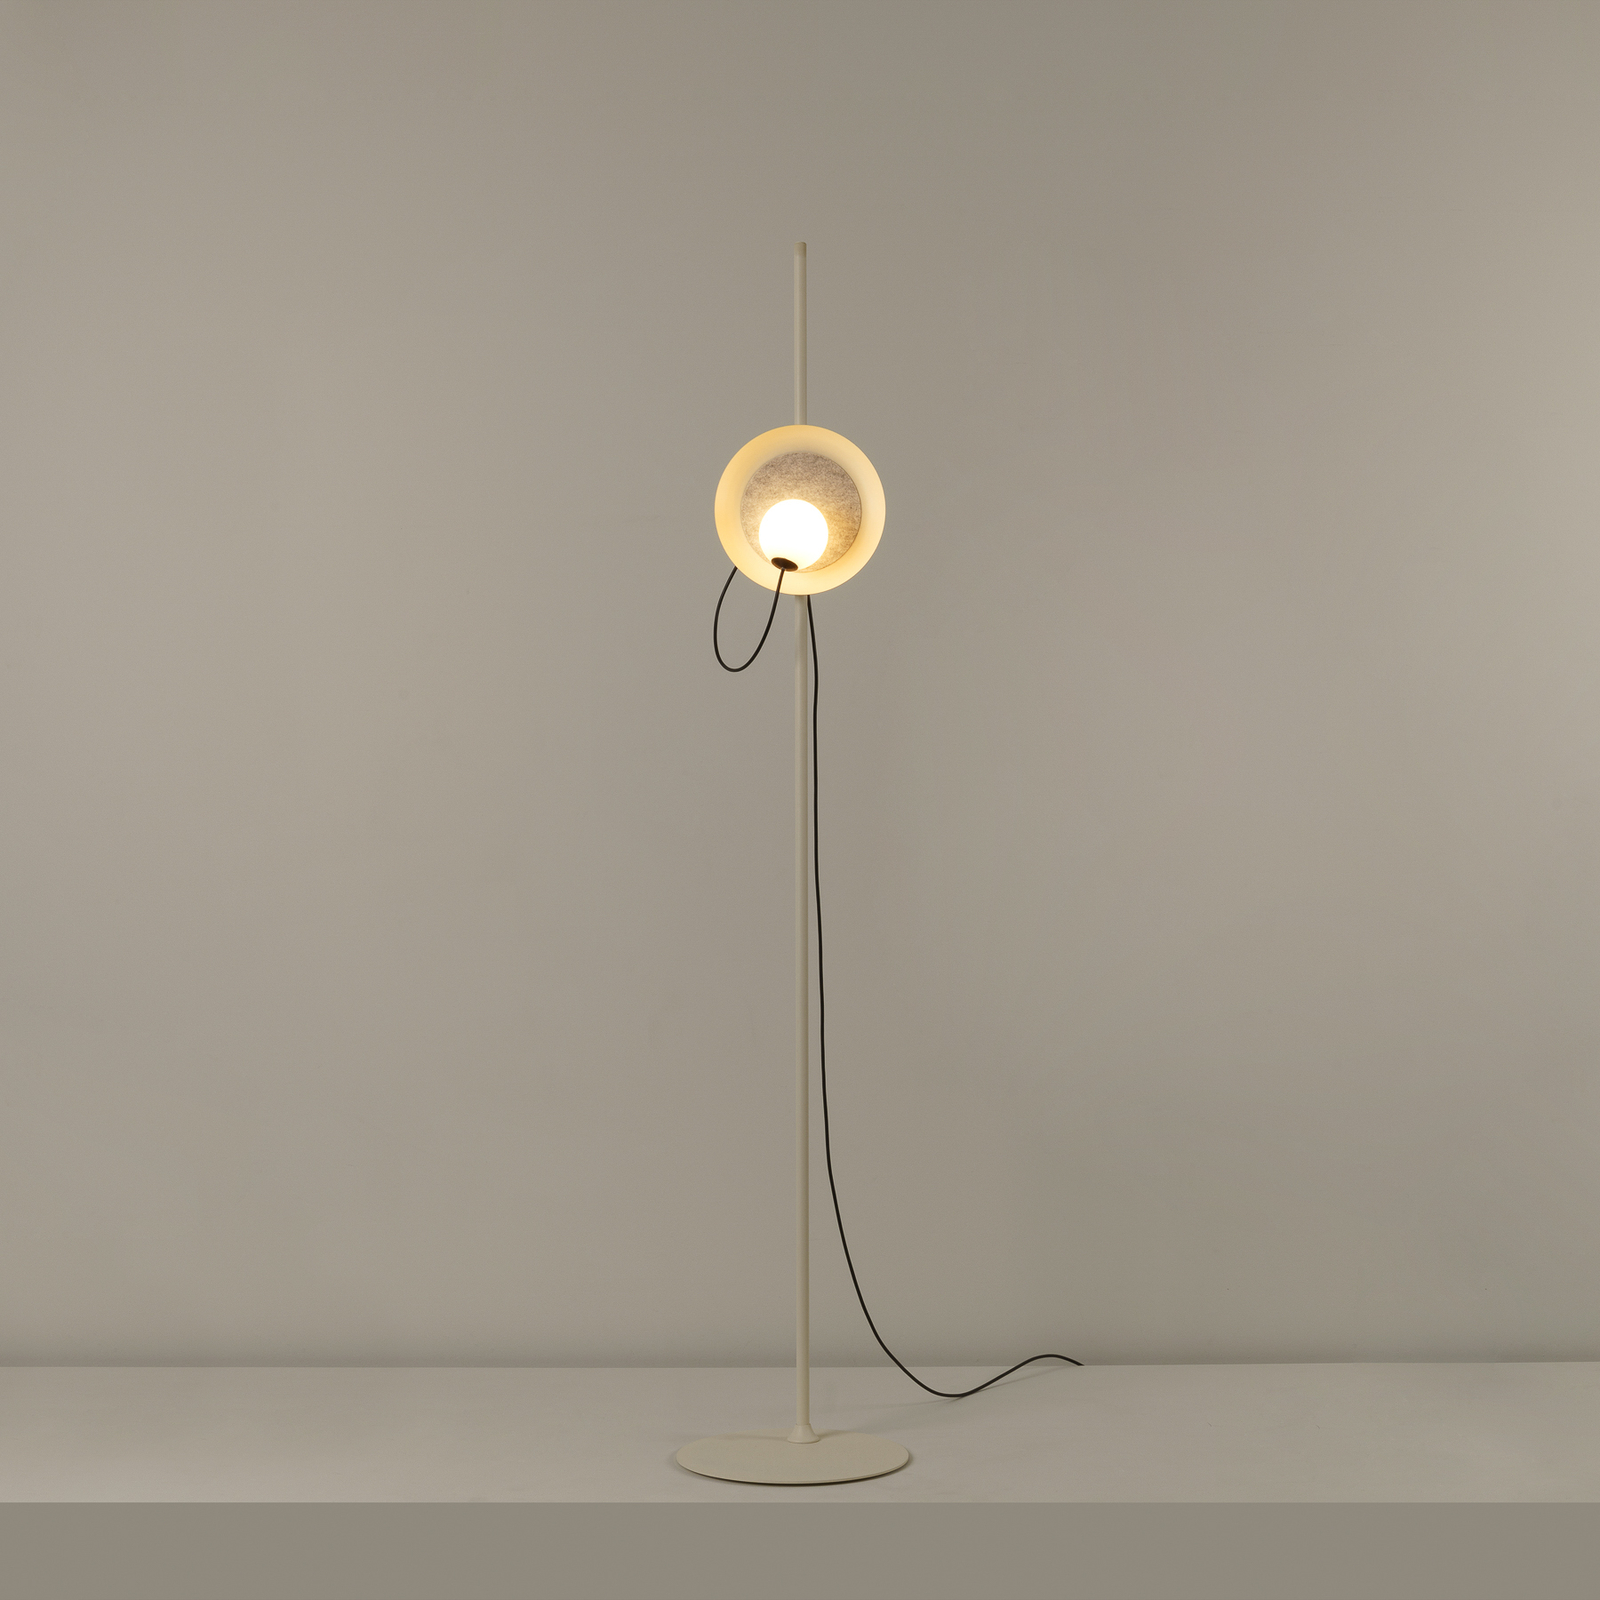 Lampa stojąca Milan Wire Ø 24 cm w kolorze norek